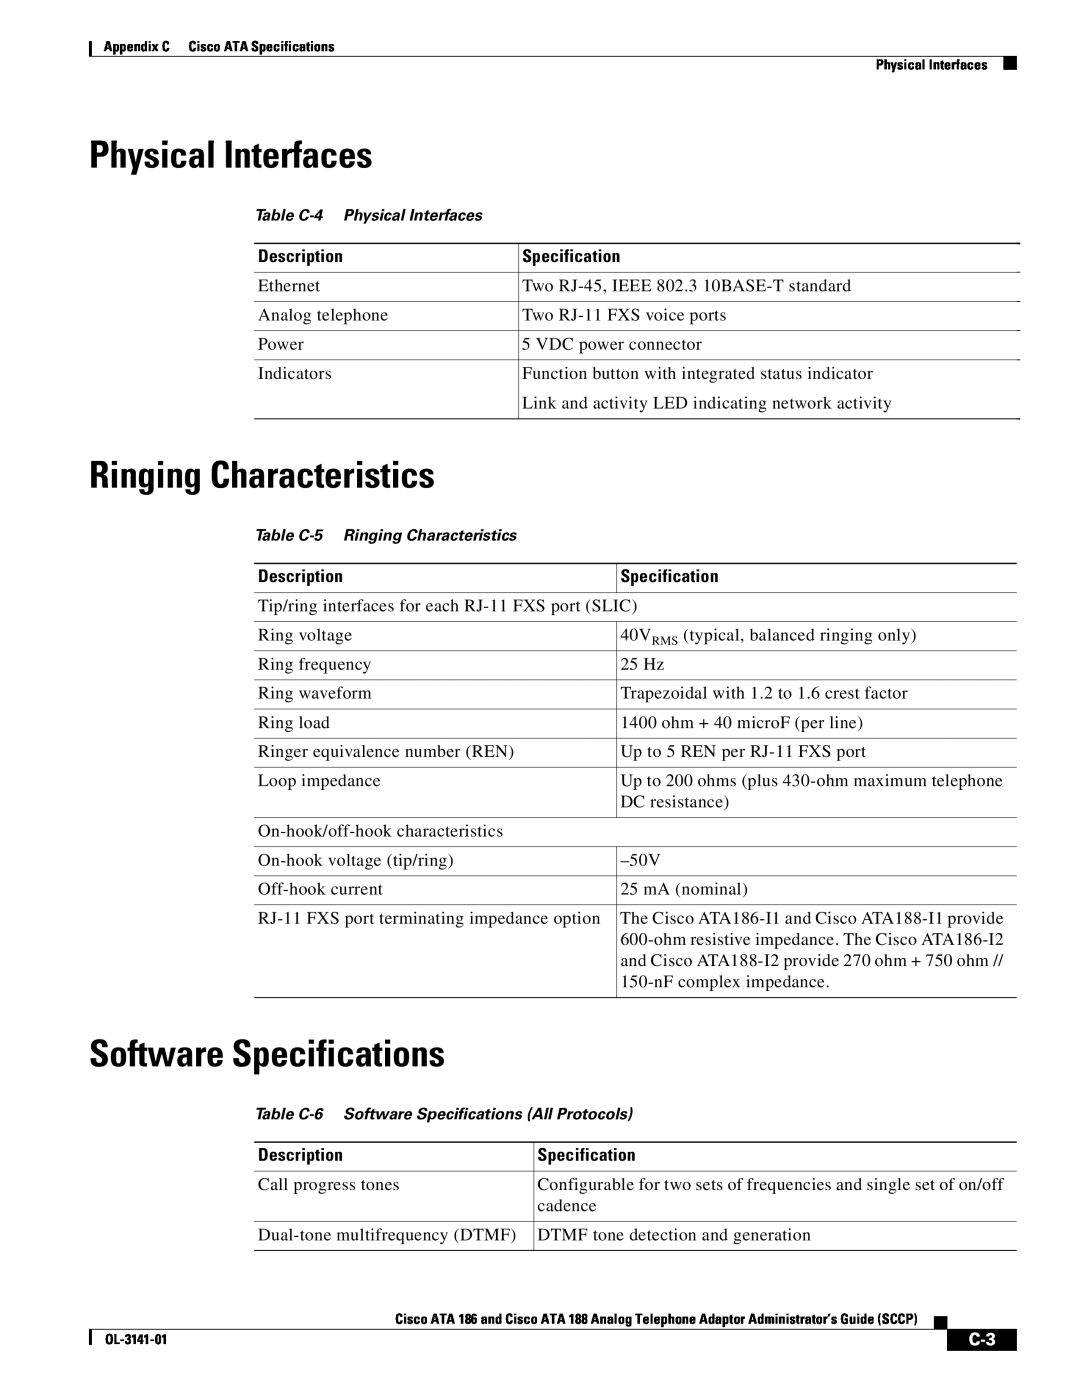 Cisco Systems ATA 188, ATA 186 manual Physical Interfaces, Ringing Characteristics, Software Specifications, Description 